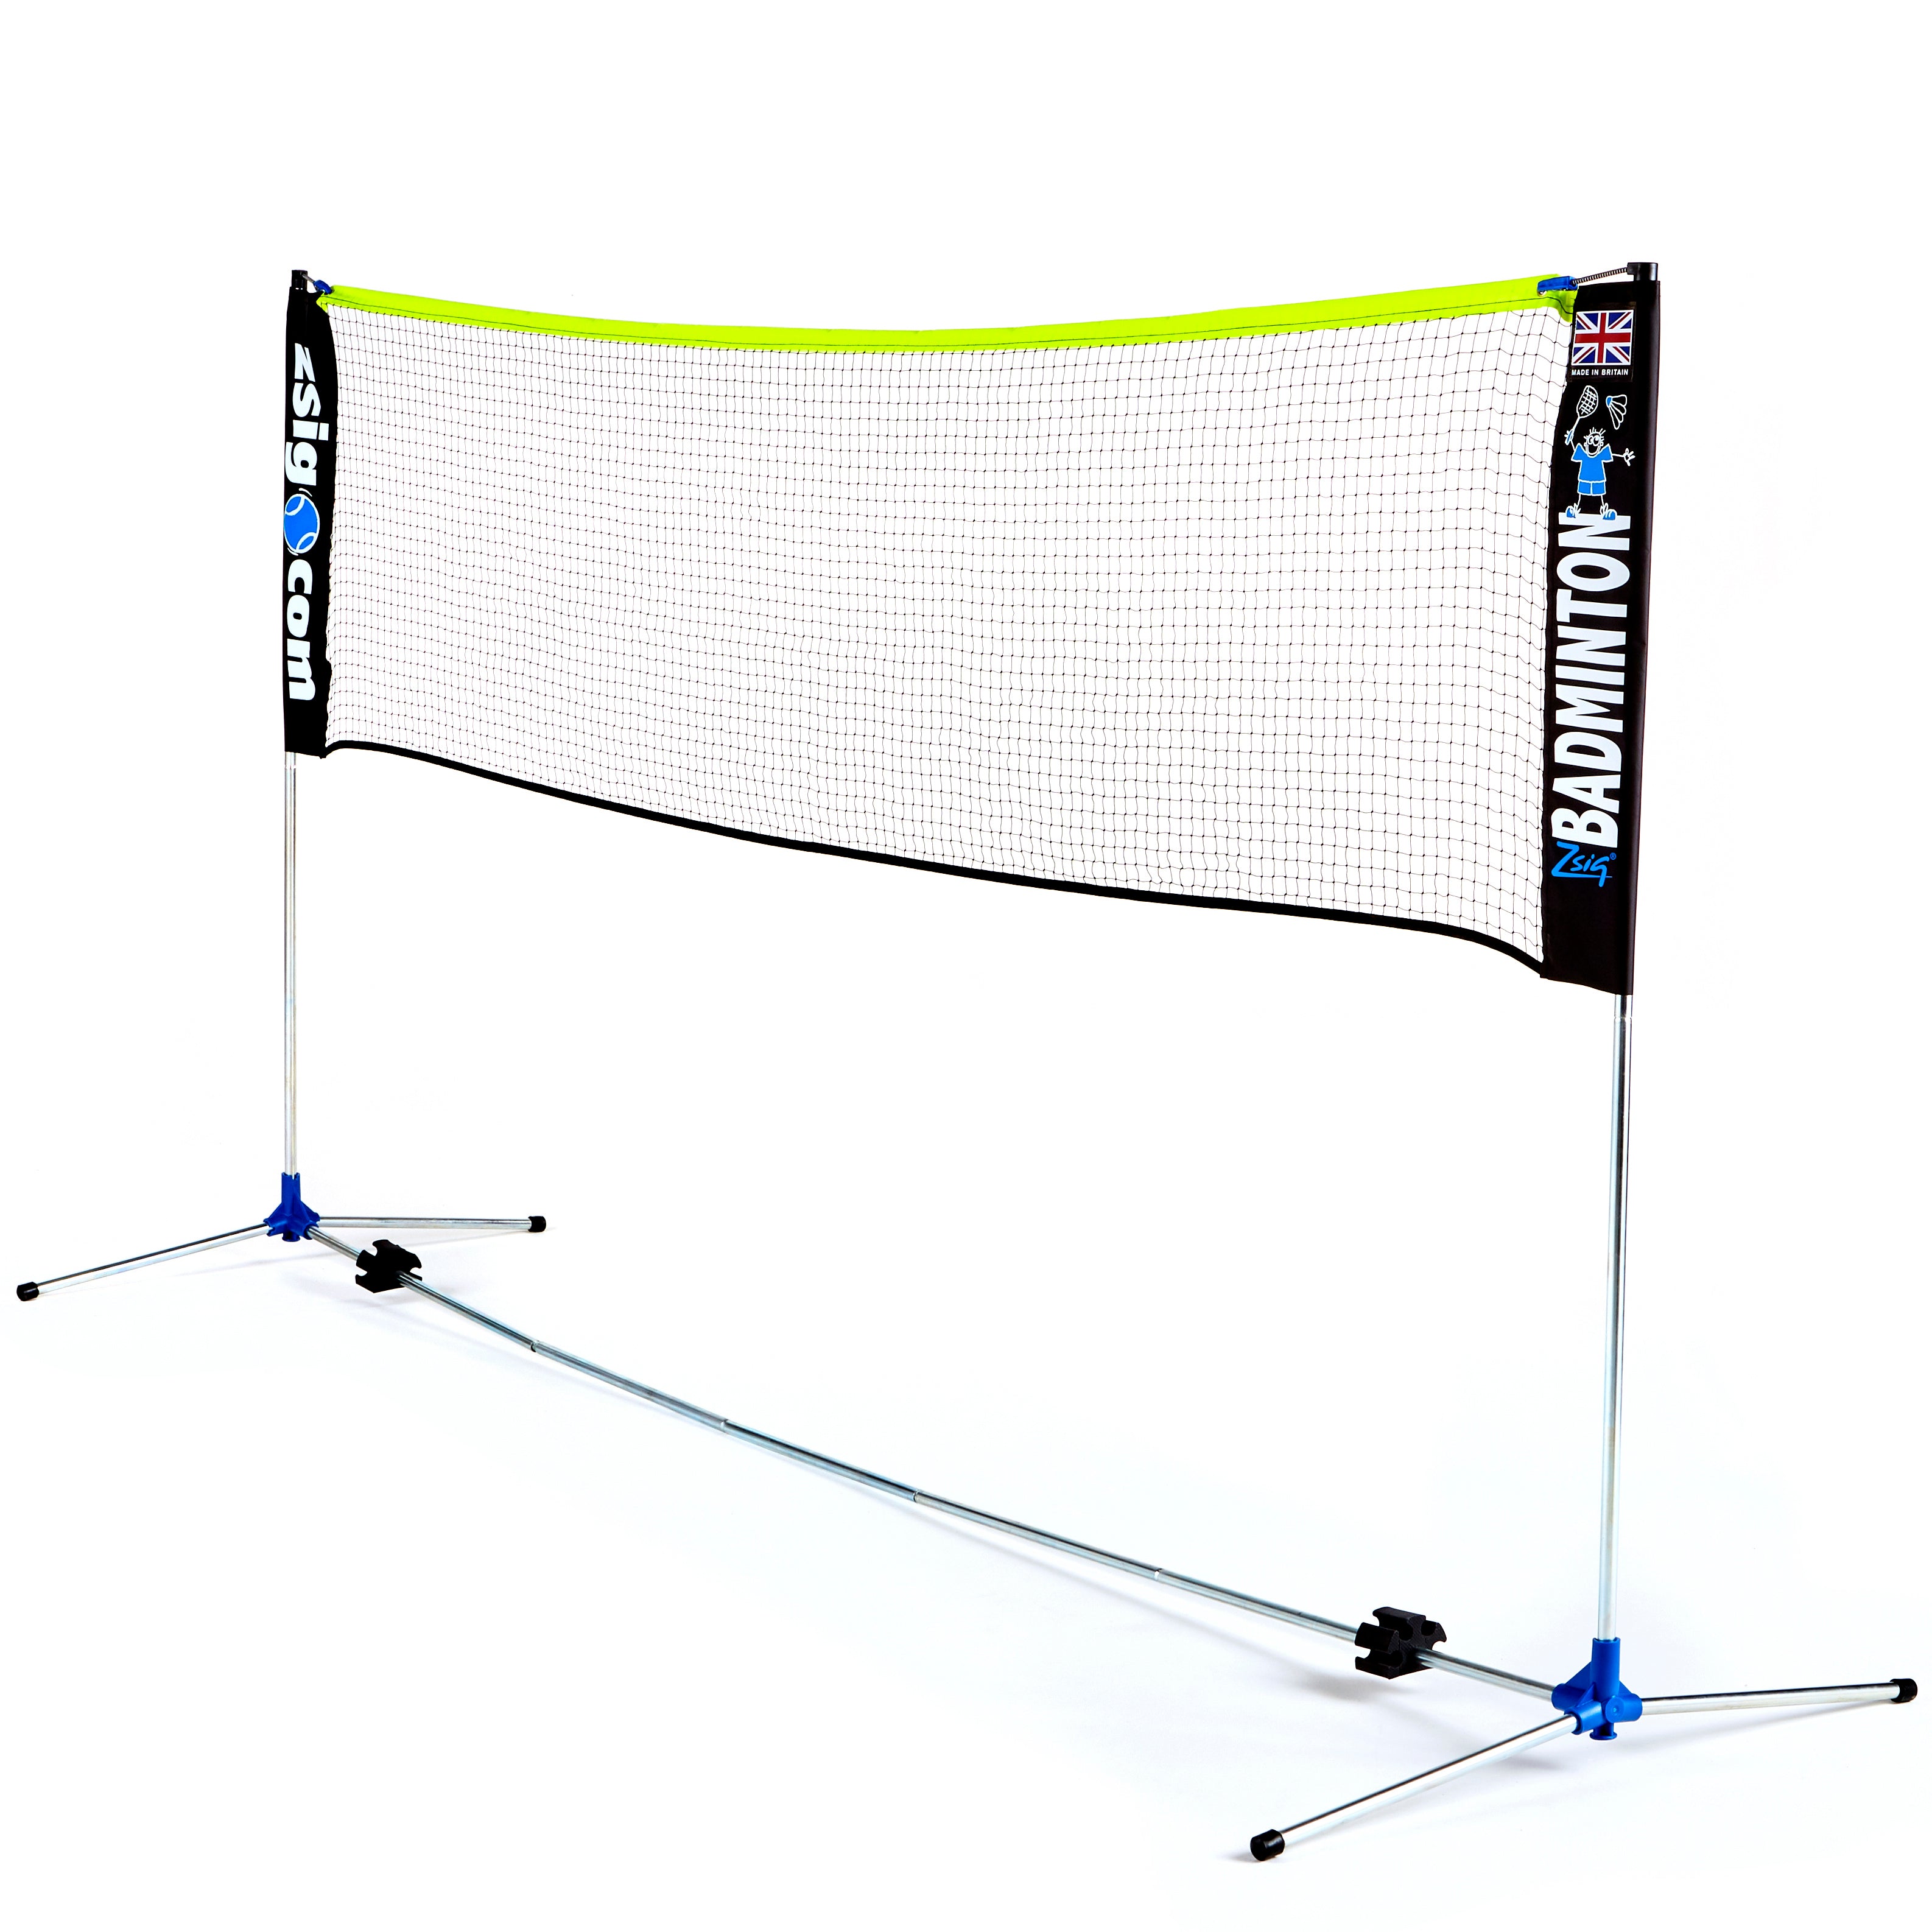 Zsig 3m Classic Badminton Net - 1.55 cm at raised side poles.